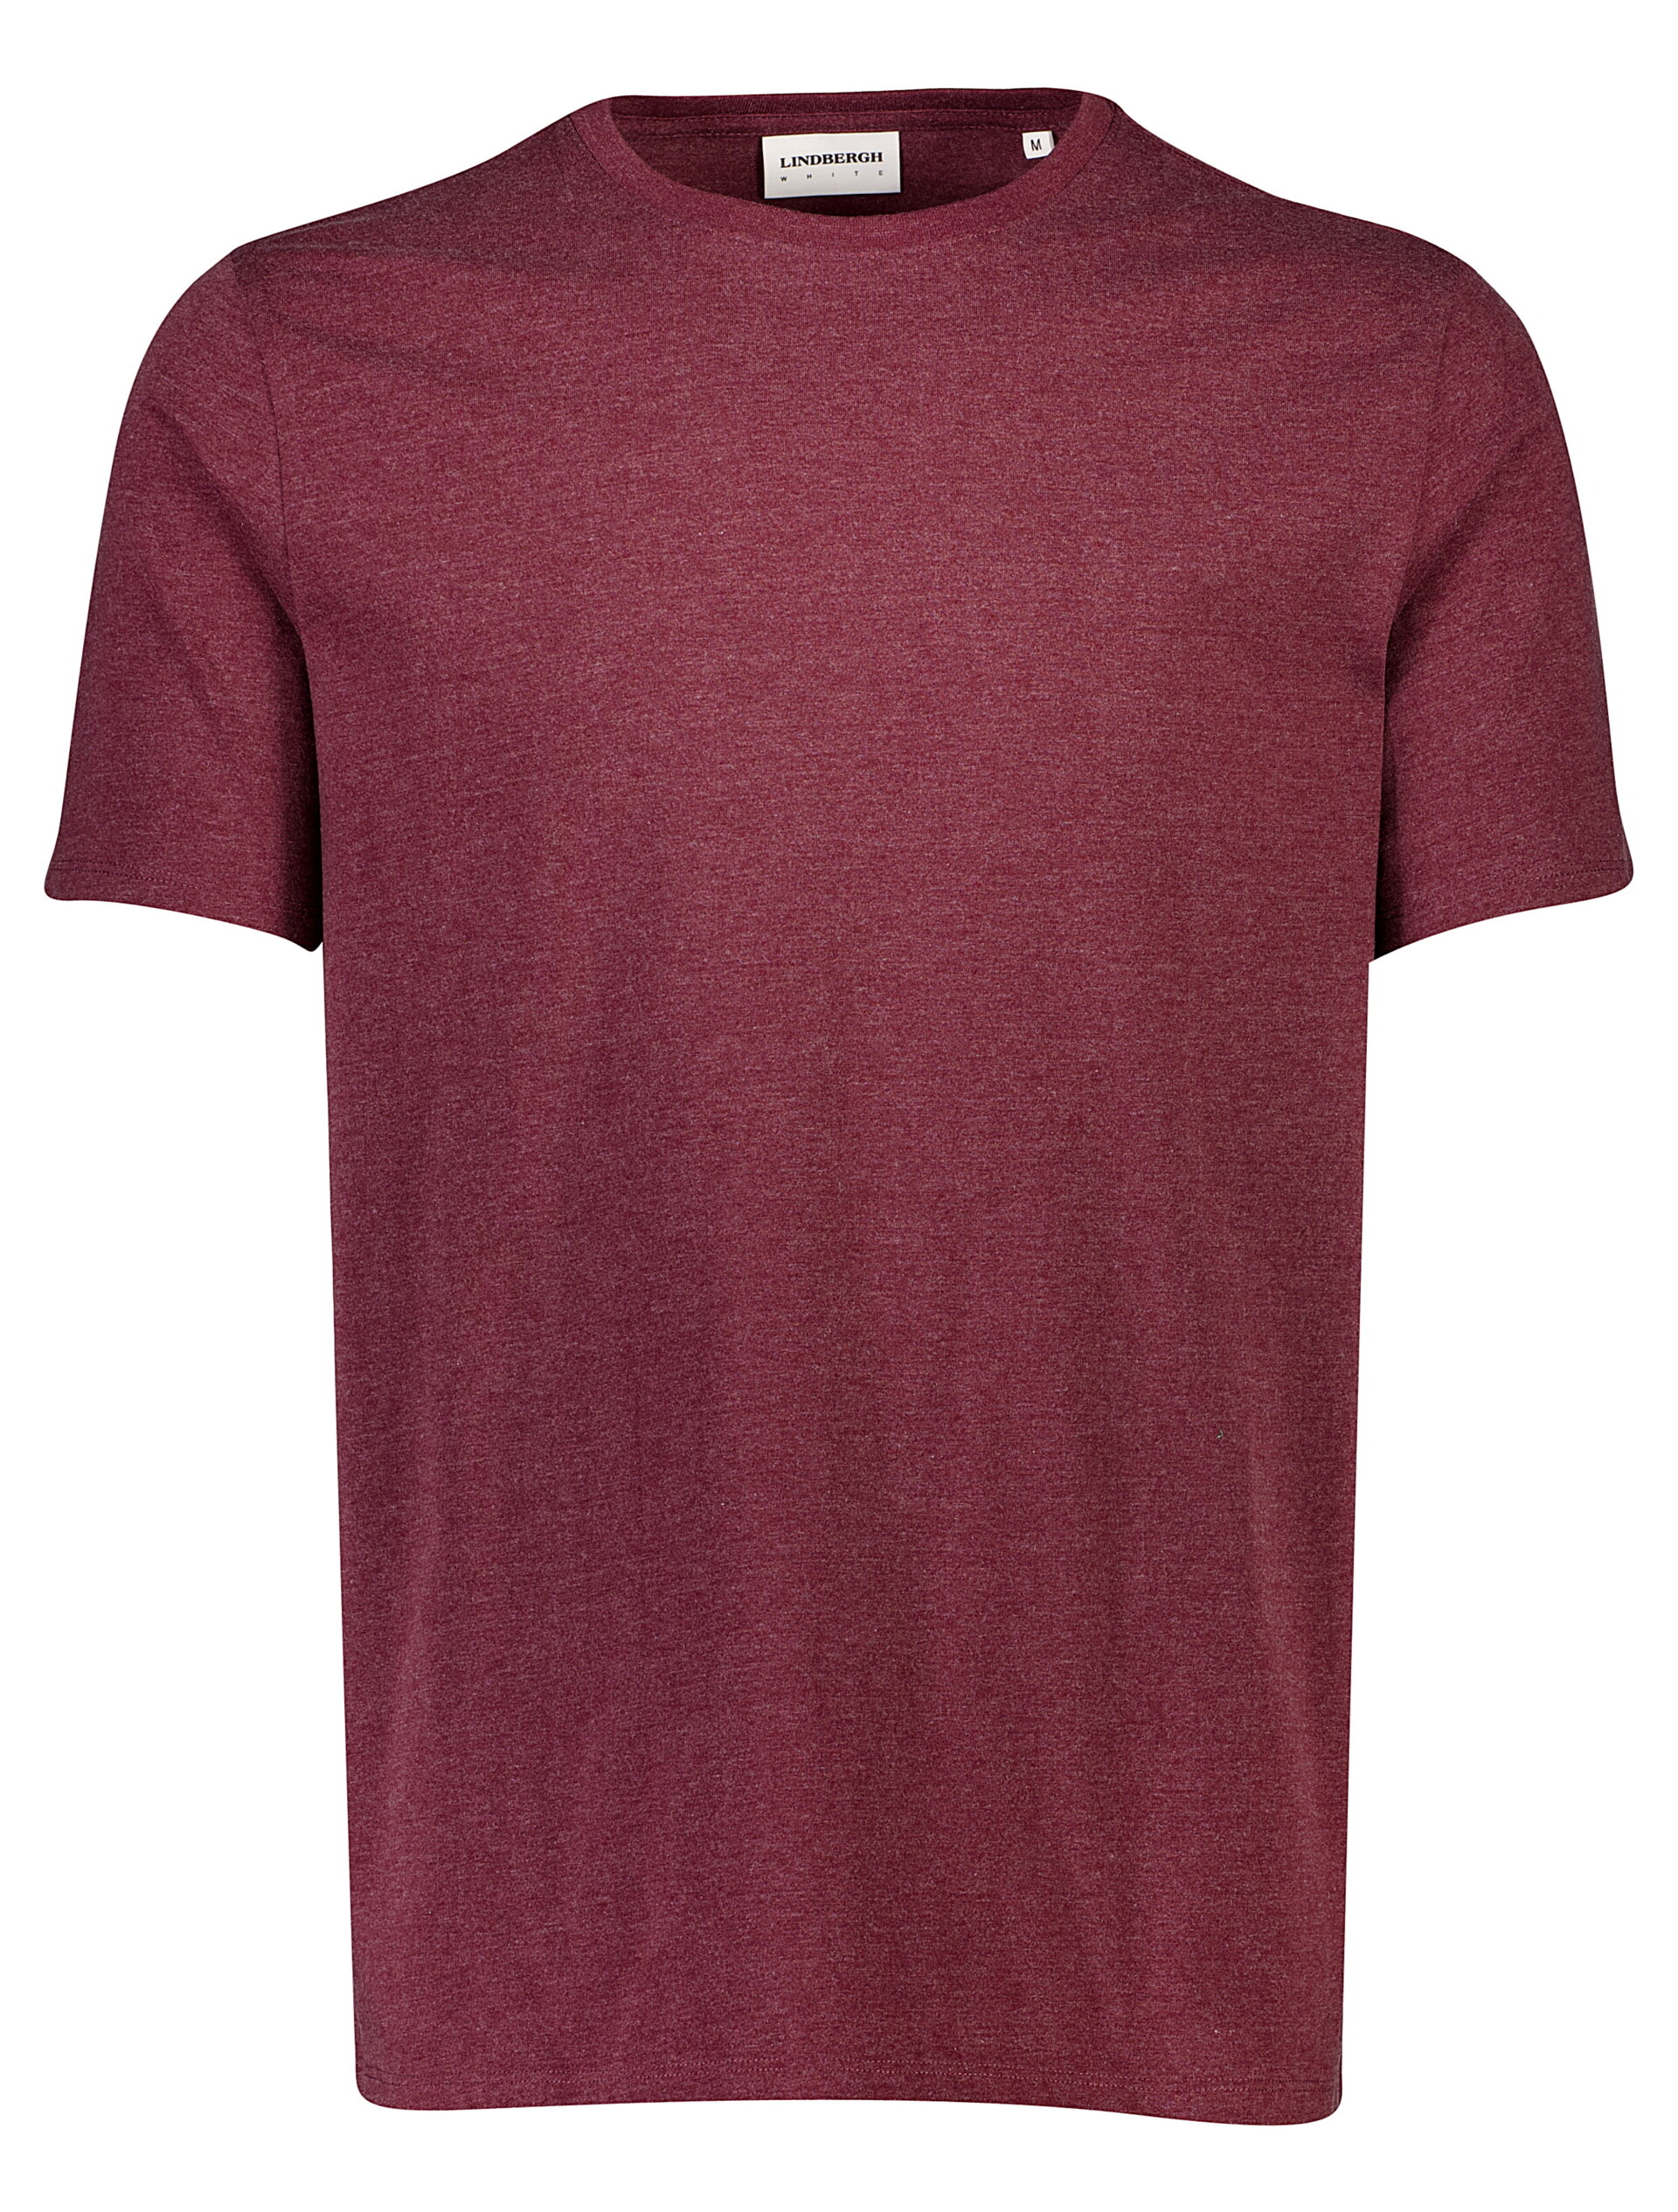 Lindbergh T-shirt rood / burgundy mel